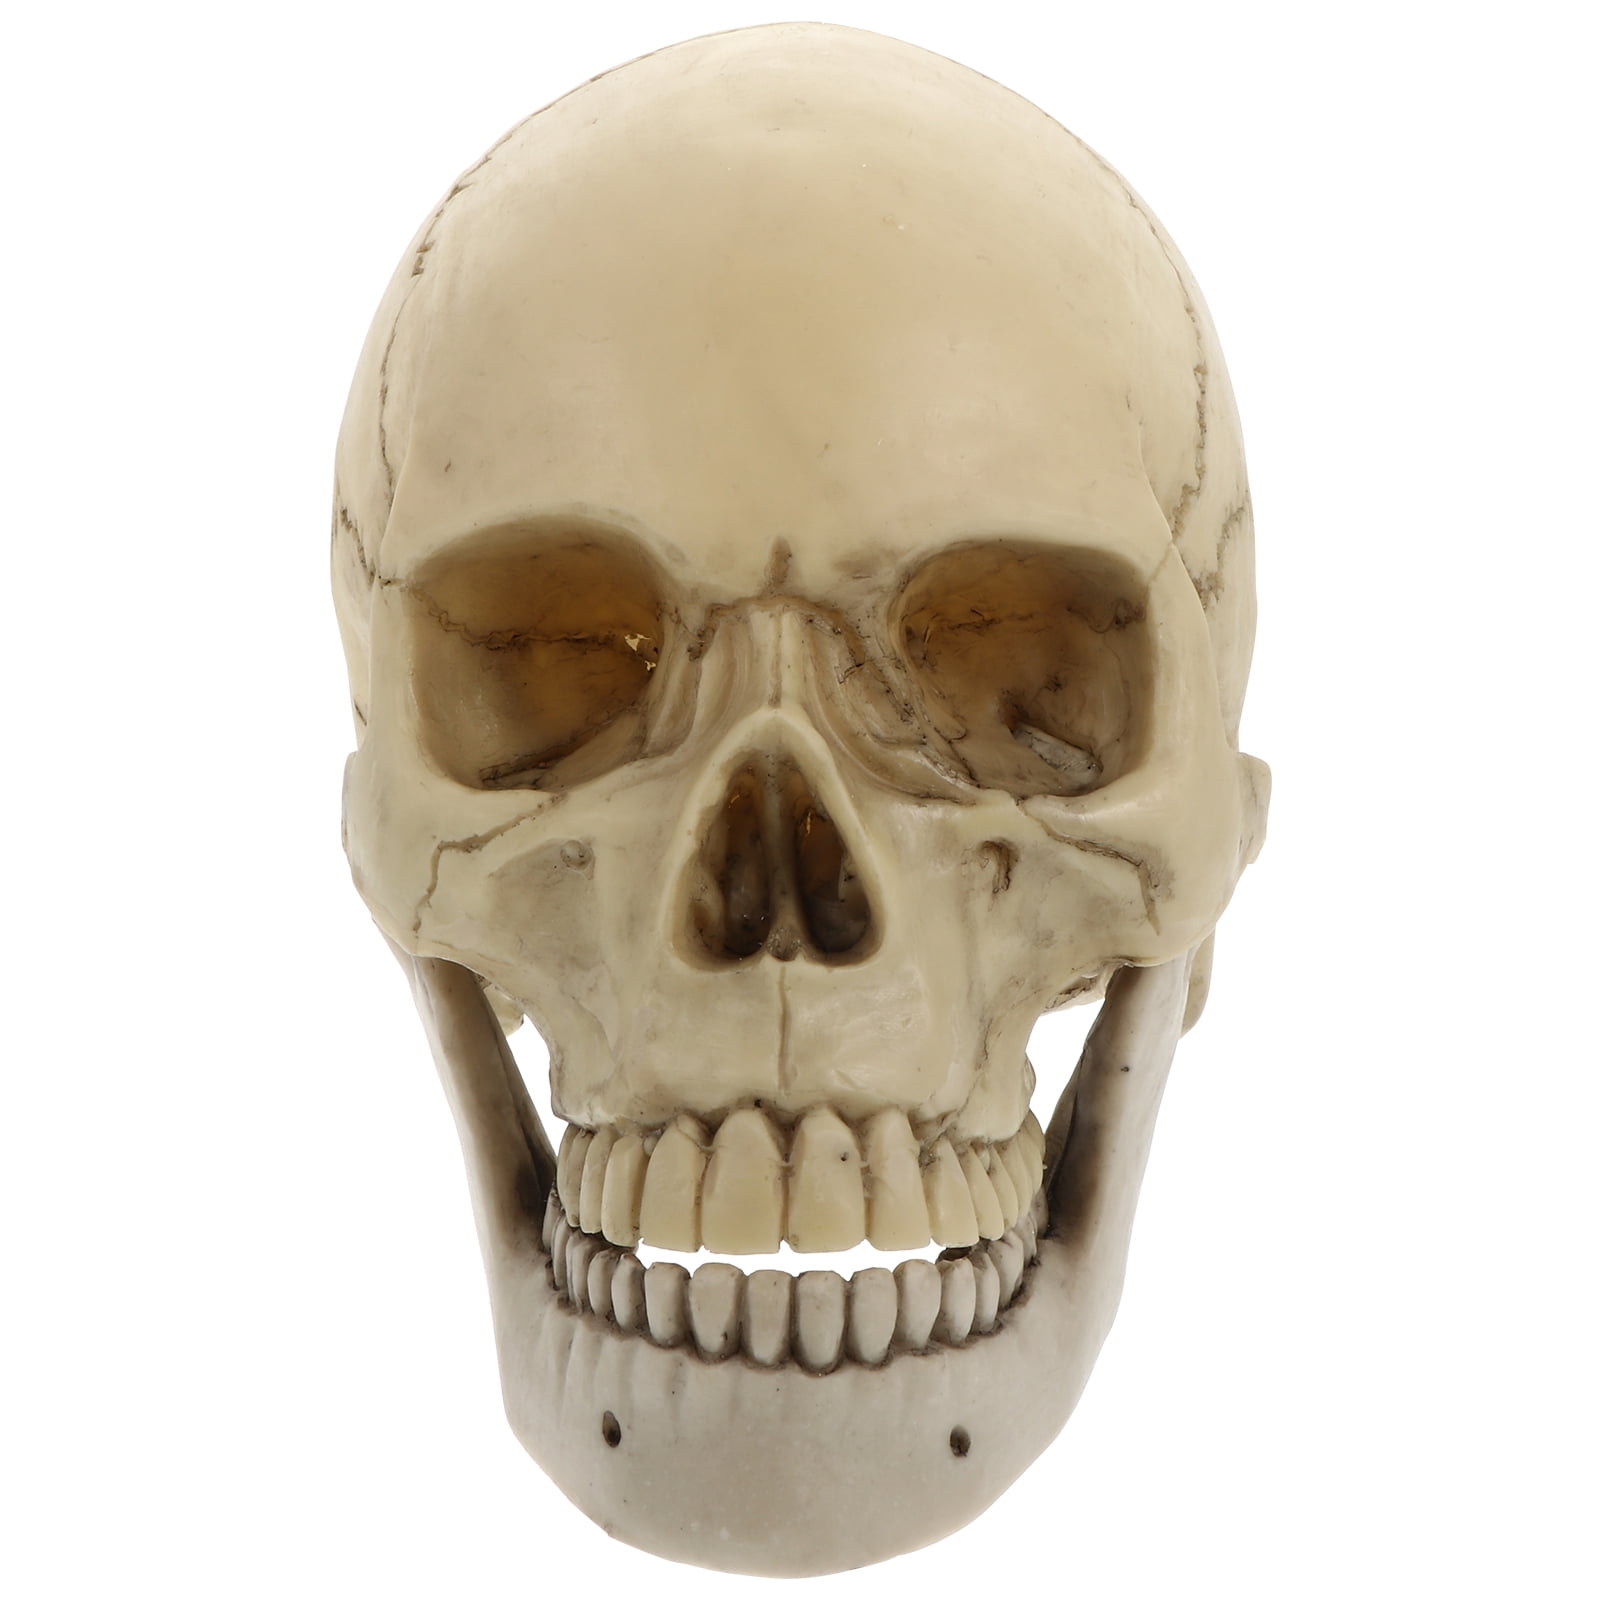 Realistic 1:1 Human Skull Replica Model Anatomical  Skeleton Ornament 